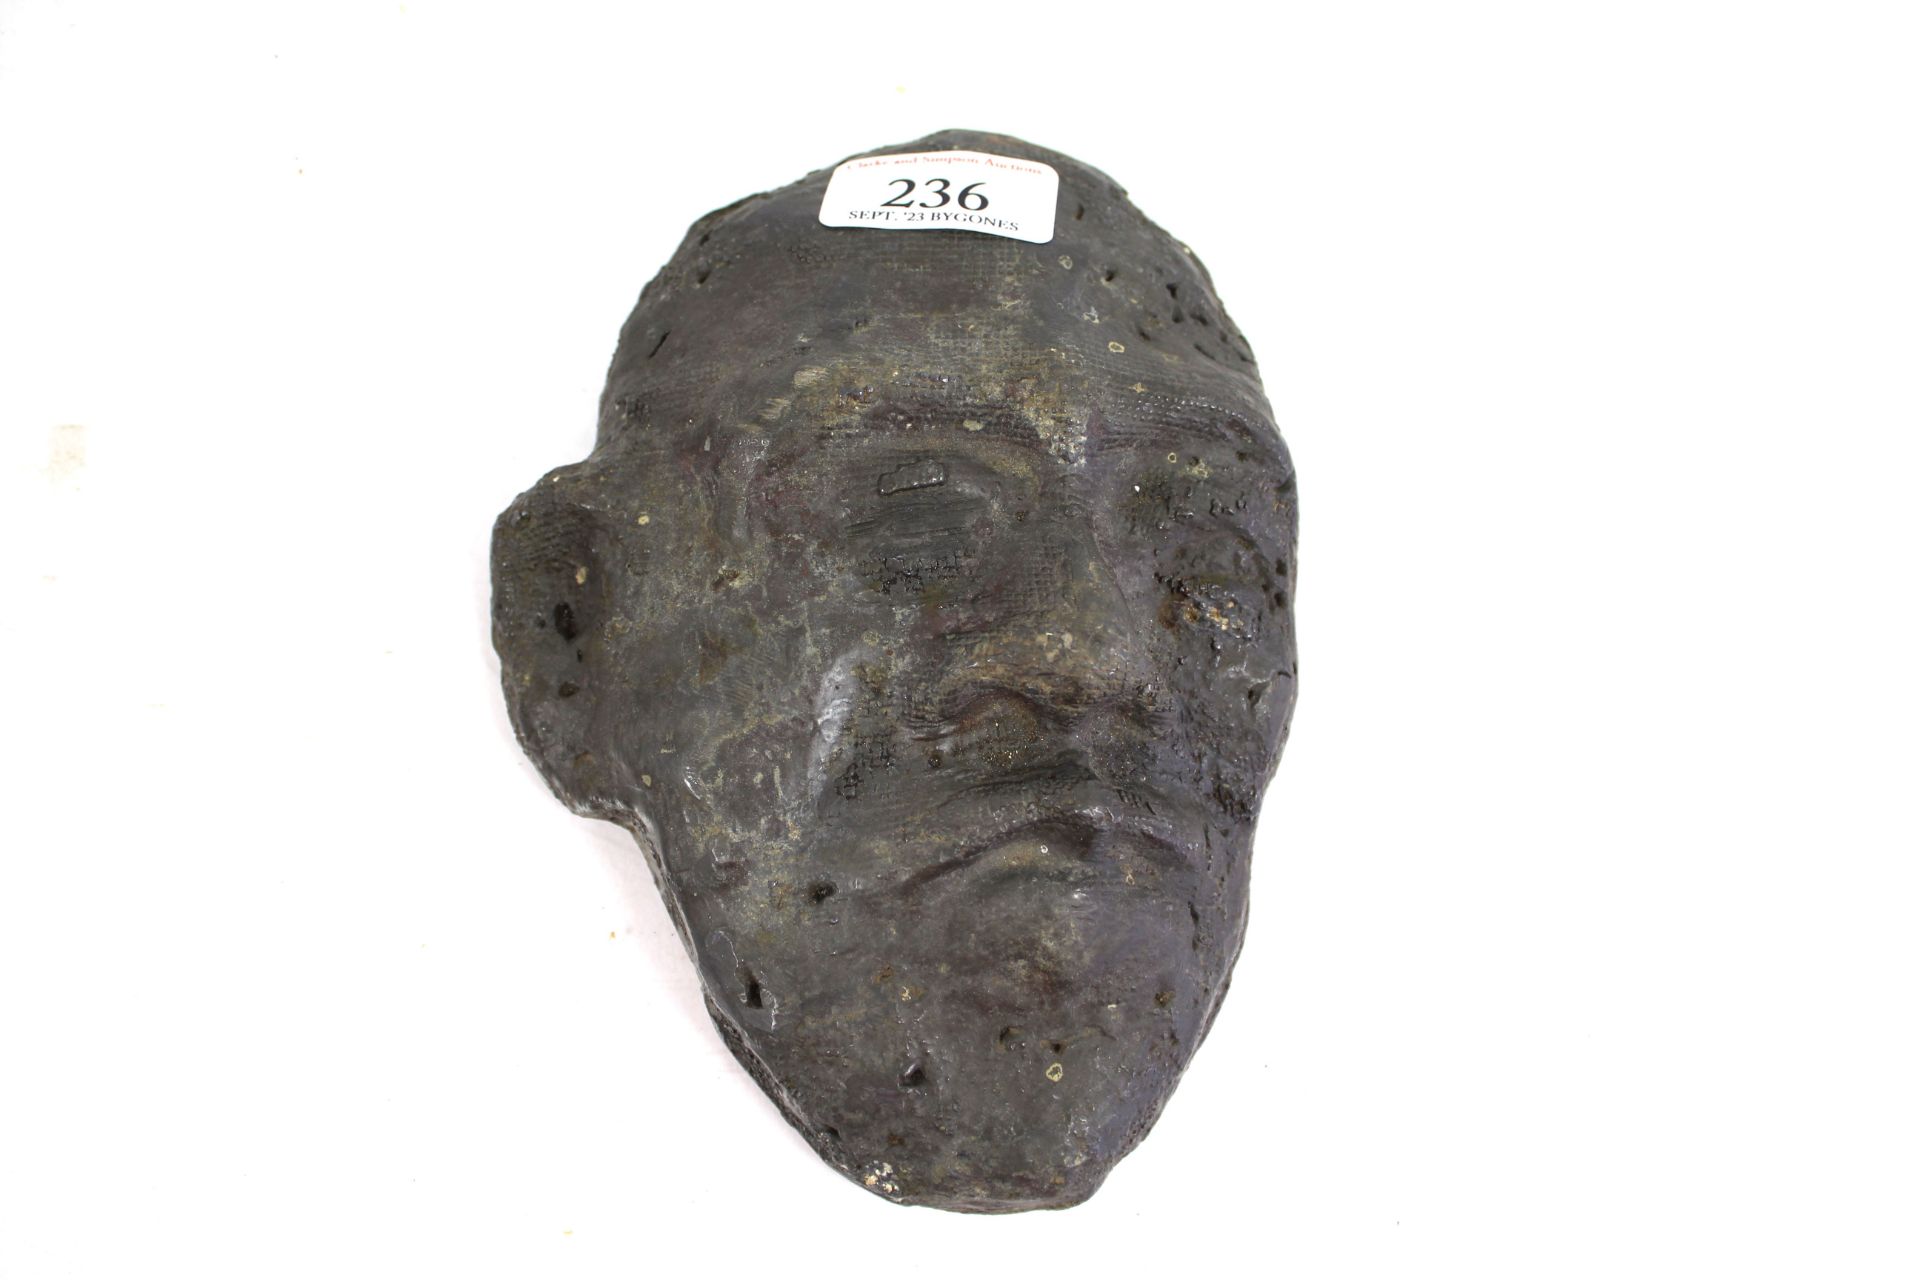 An antique lead mask